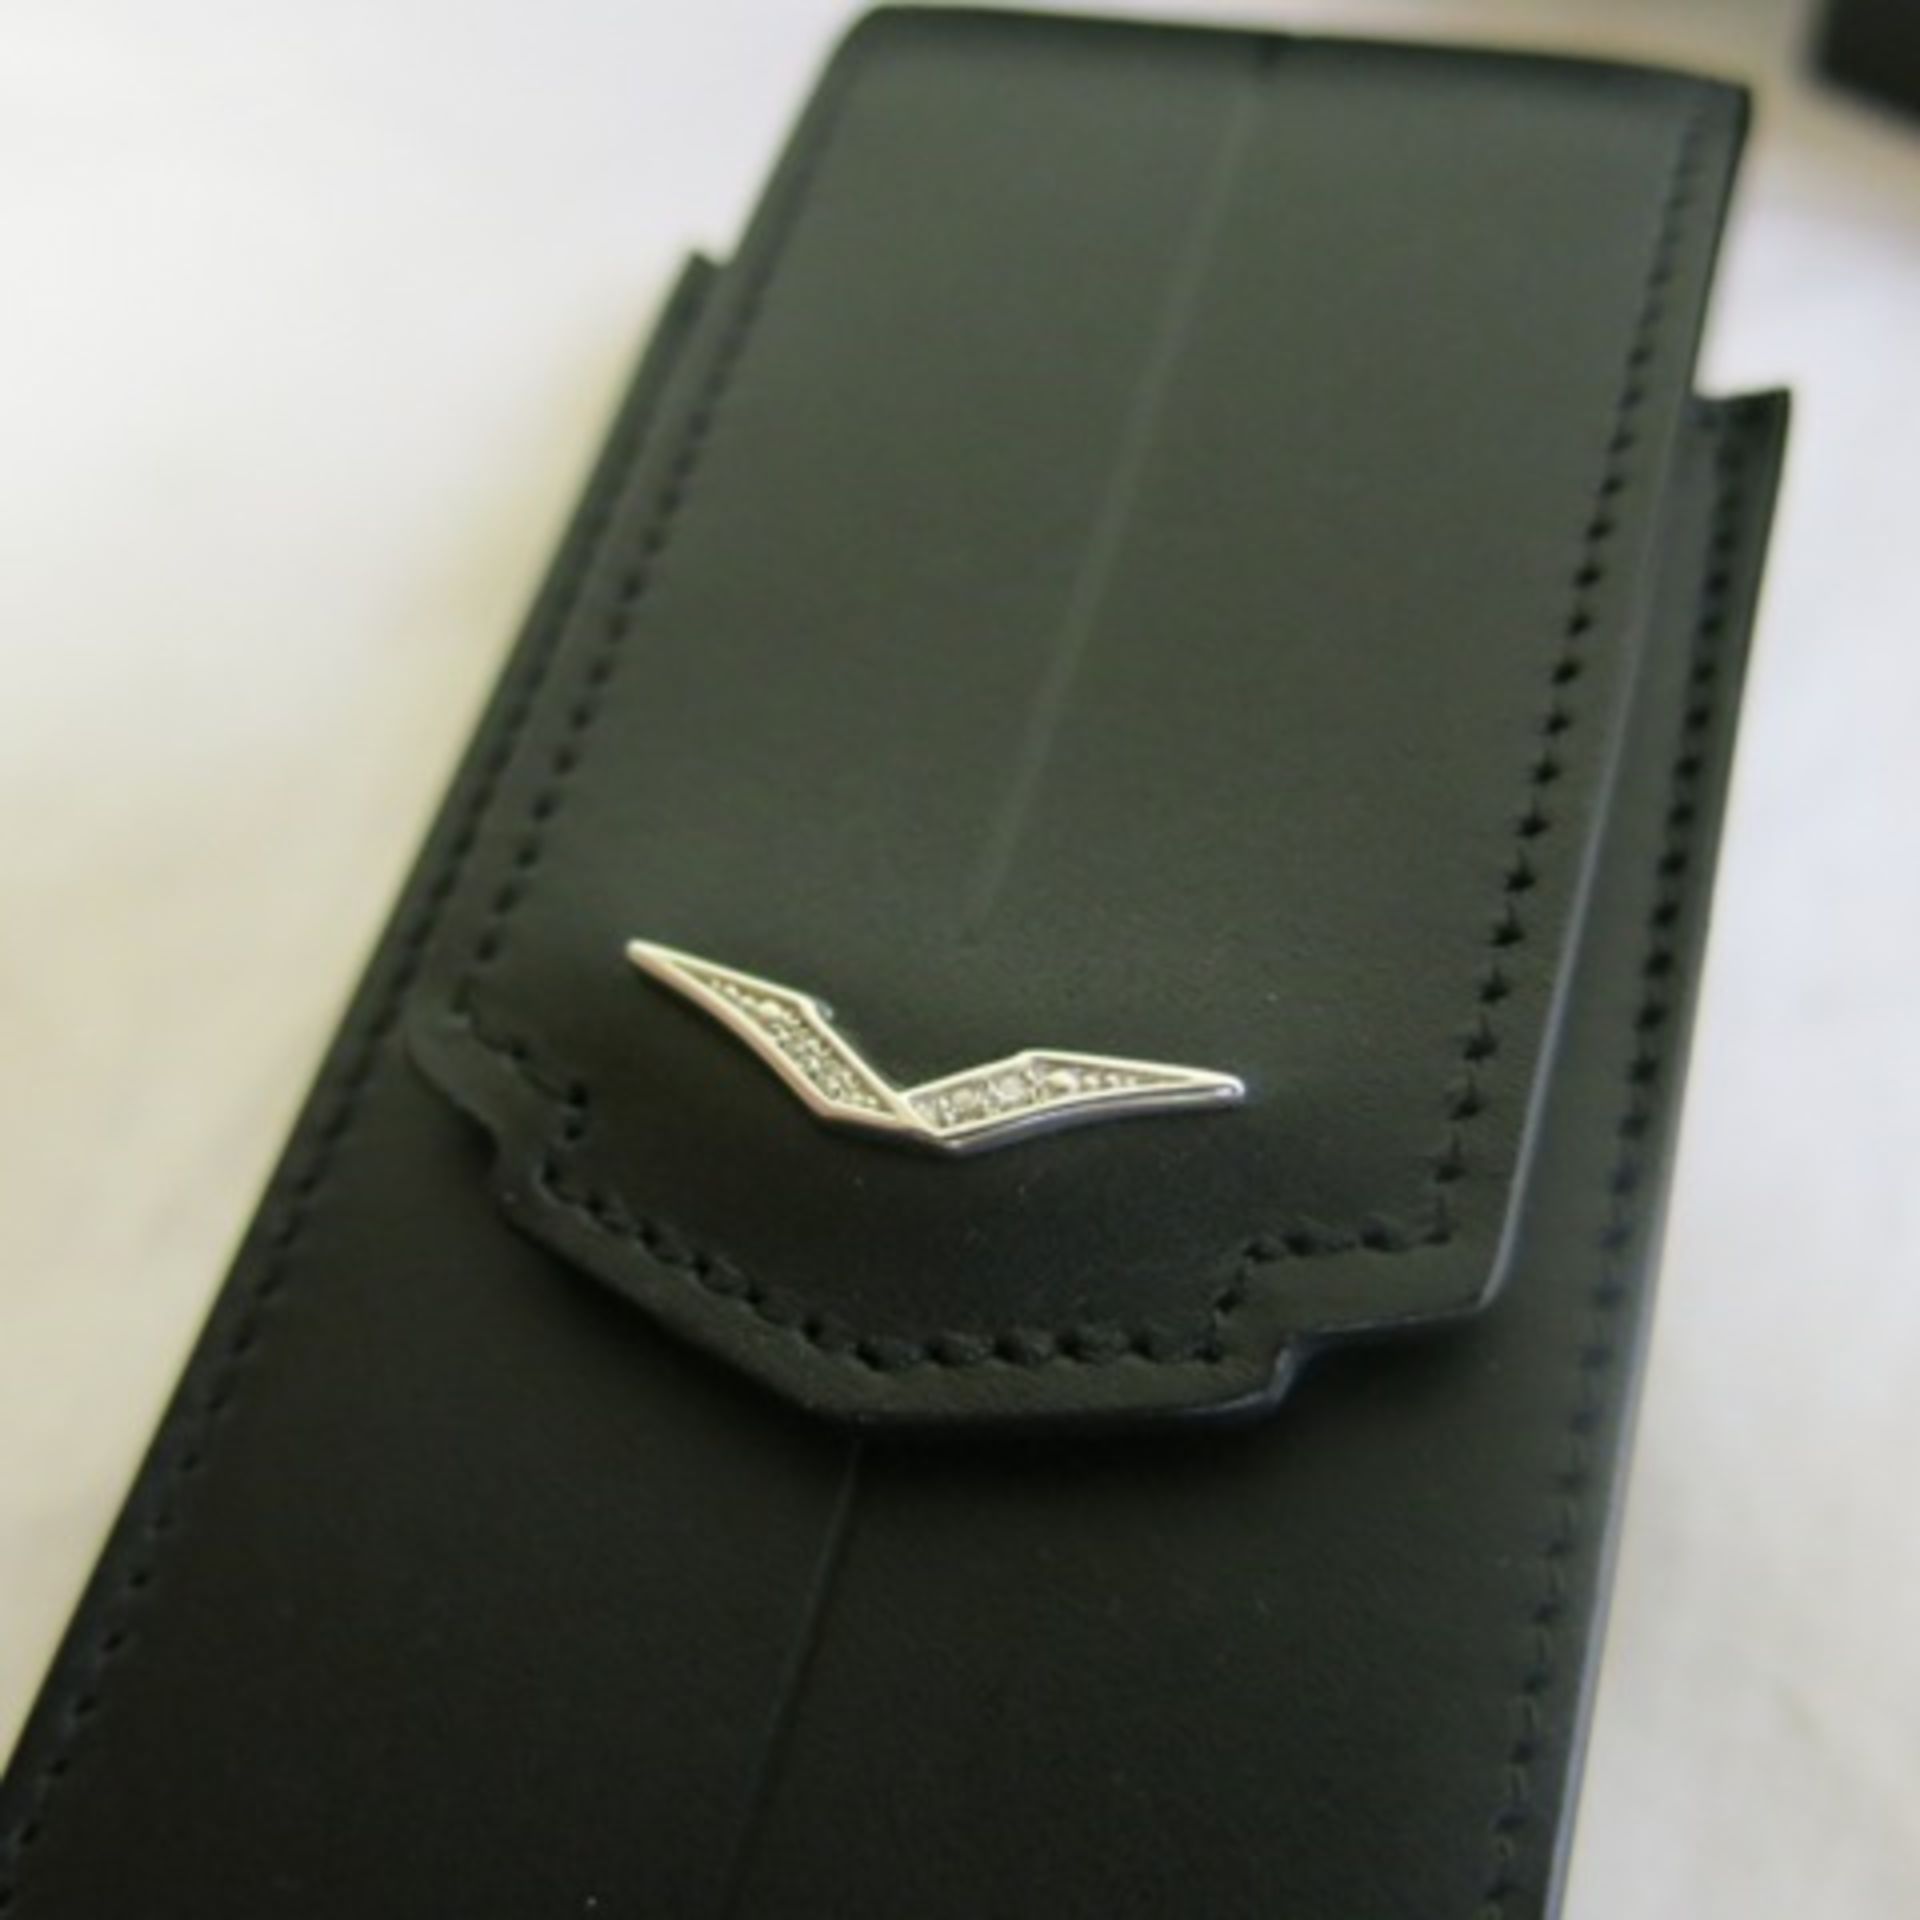 Vertu Signature S Vertical Black Leather Case CP332V with White Gold & Diamond V Logo & Lanyard. - Image 4 of 4